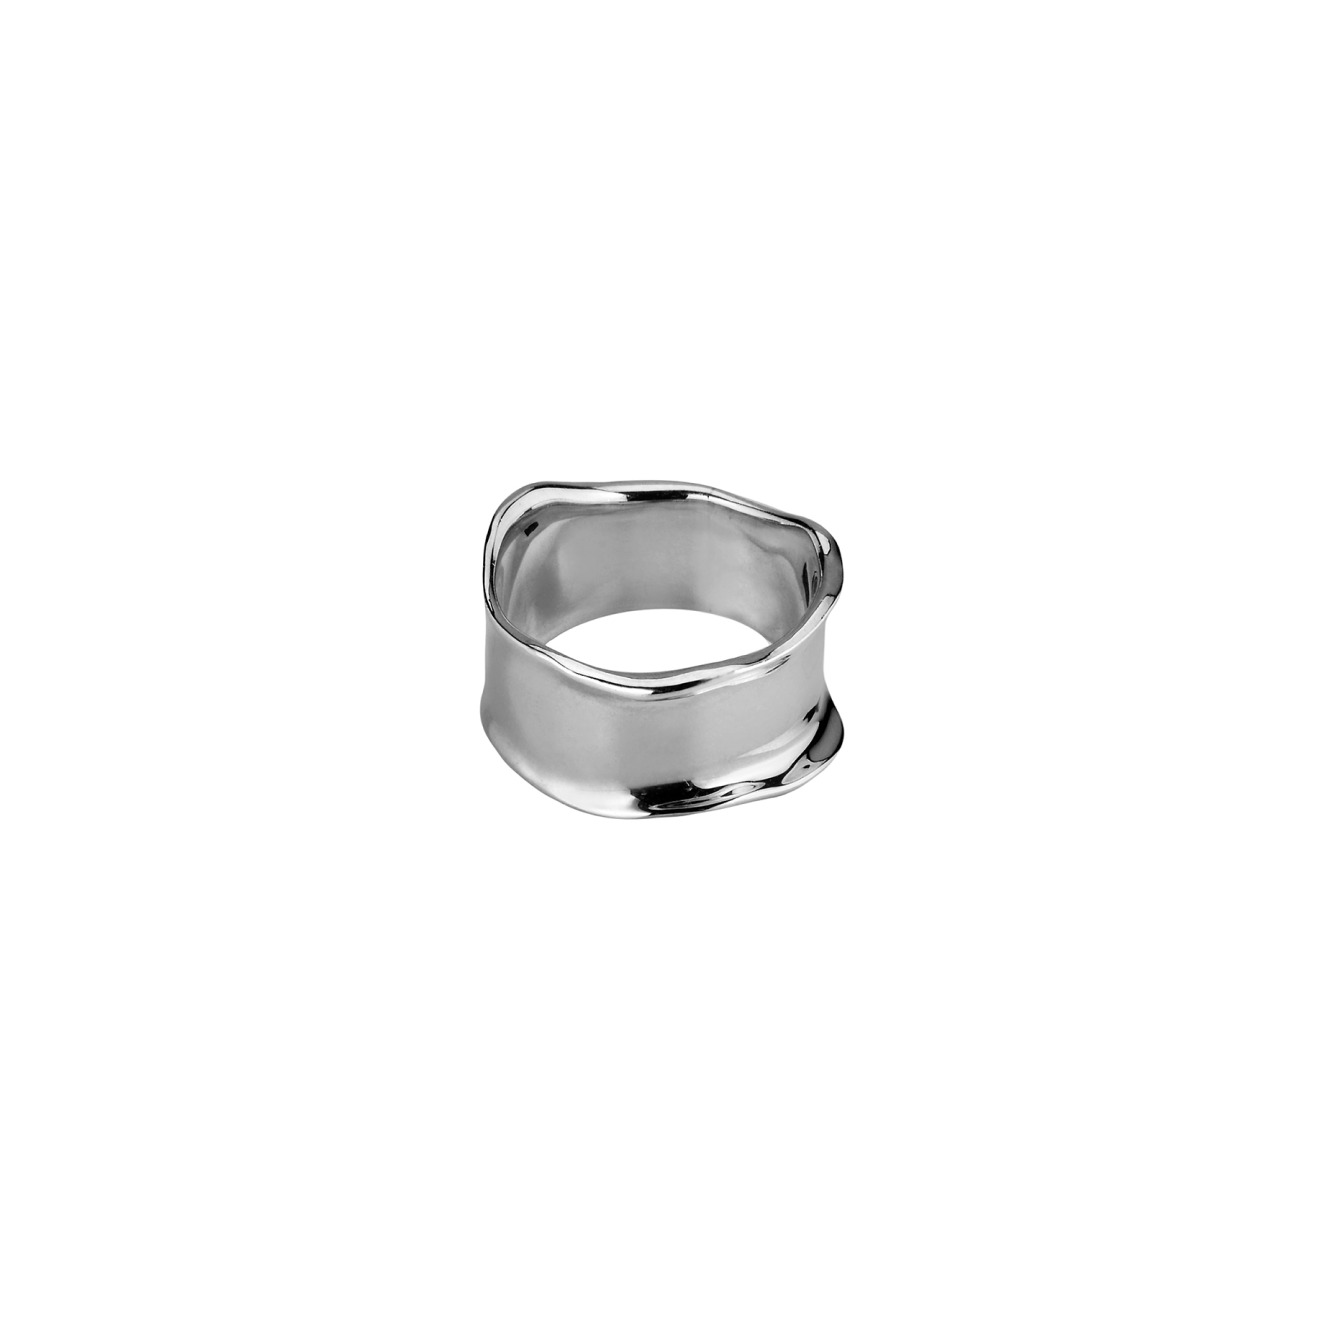 Ms. Marble Широкое кольцо из серебра Sixth Sense визитница 5 серебро 925